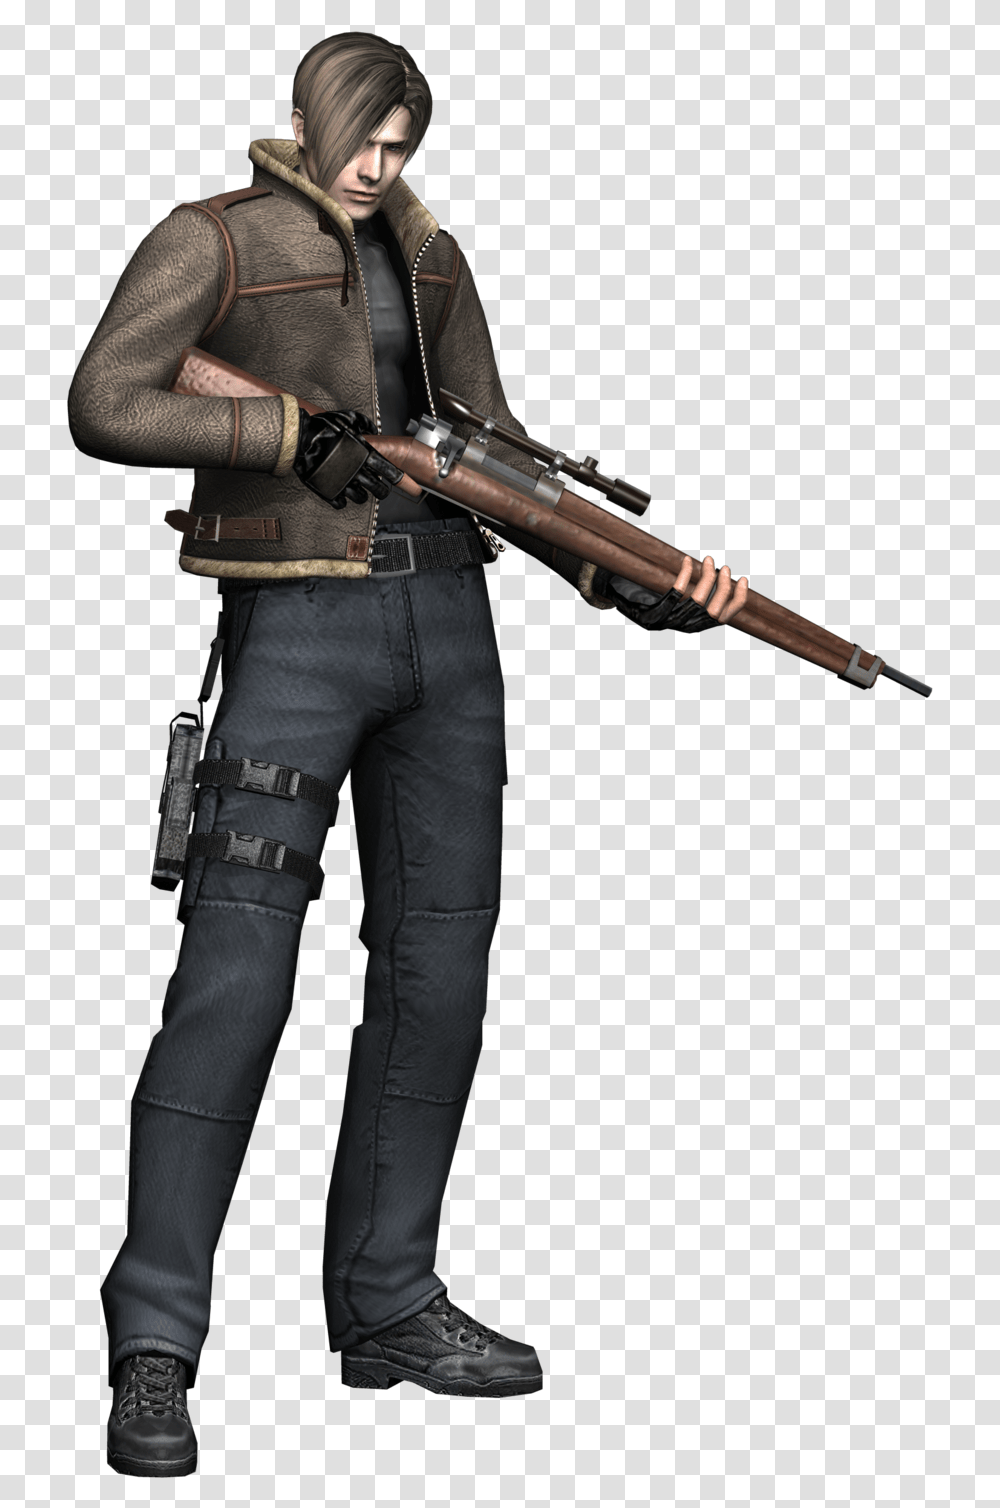 Ashley Graham Resident Evil Leon Shotgun, Person, Human, Weapon, Weaponry Transparent Png